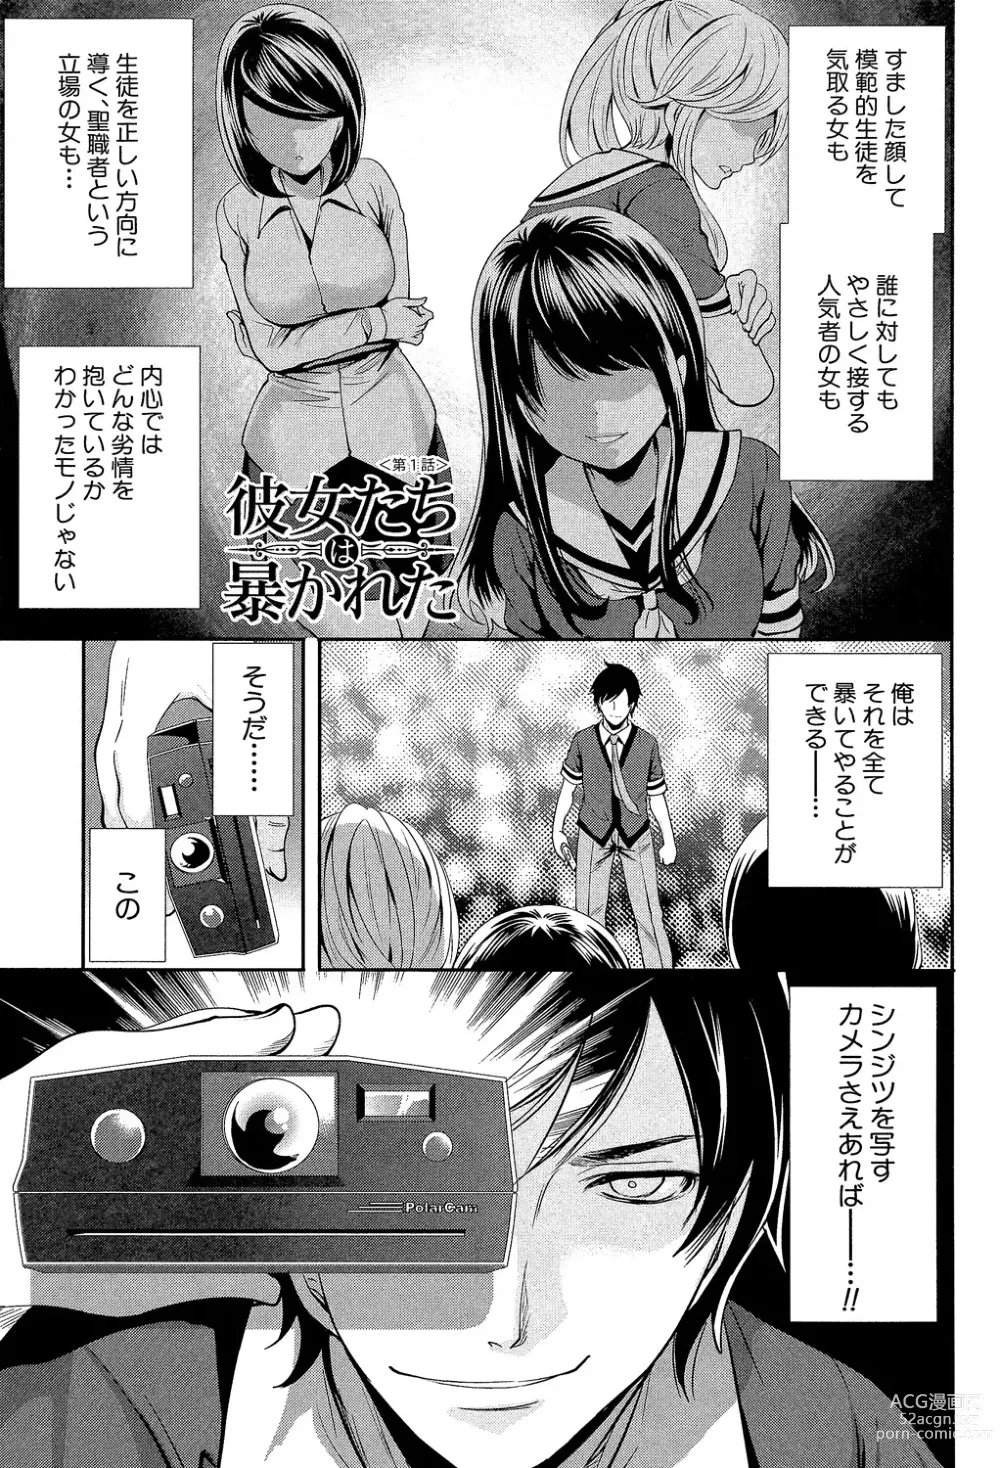 Page 7 of manga Kanojo-tachi wa Abakareta